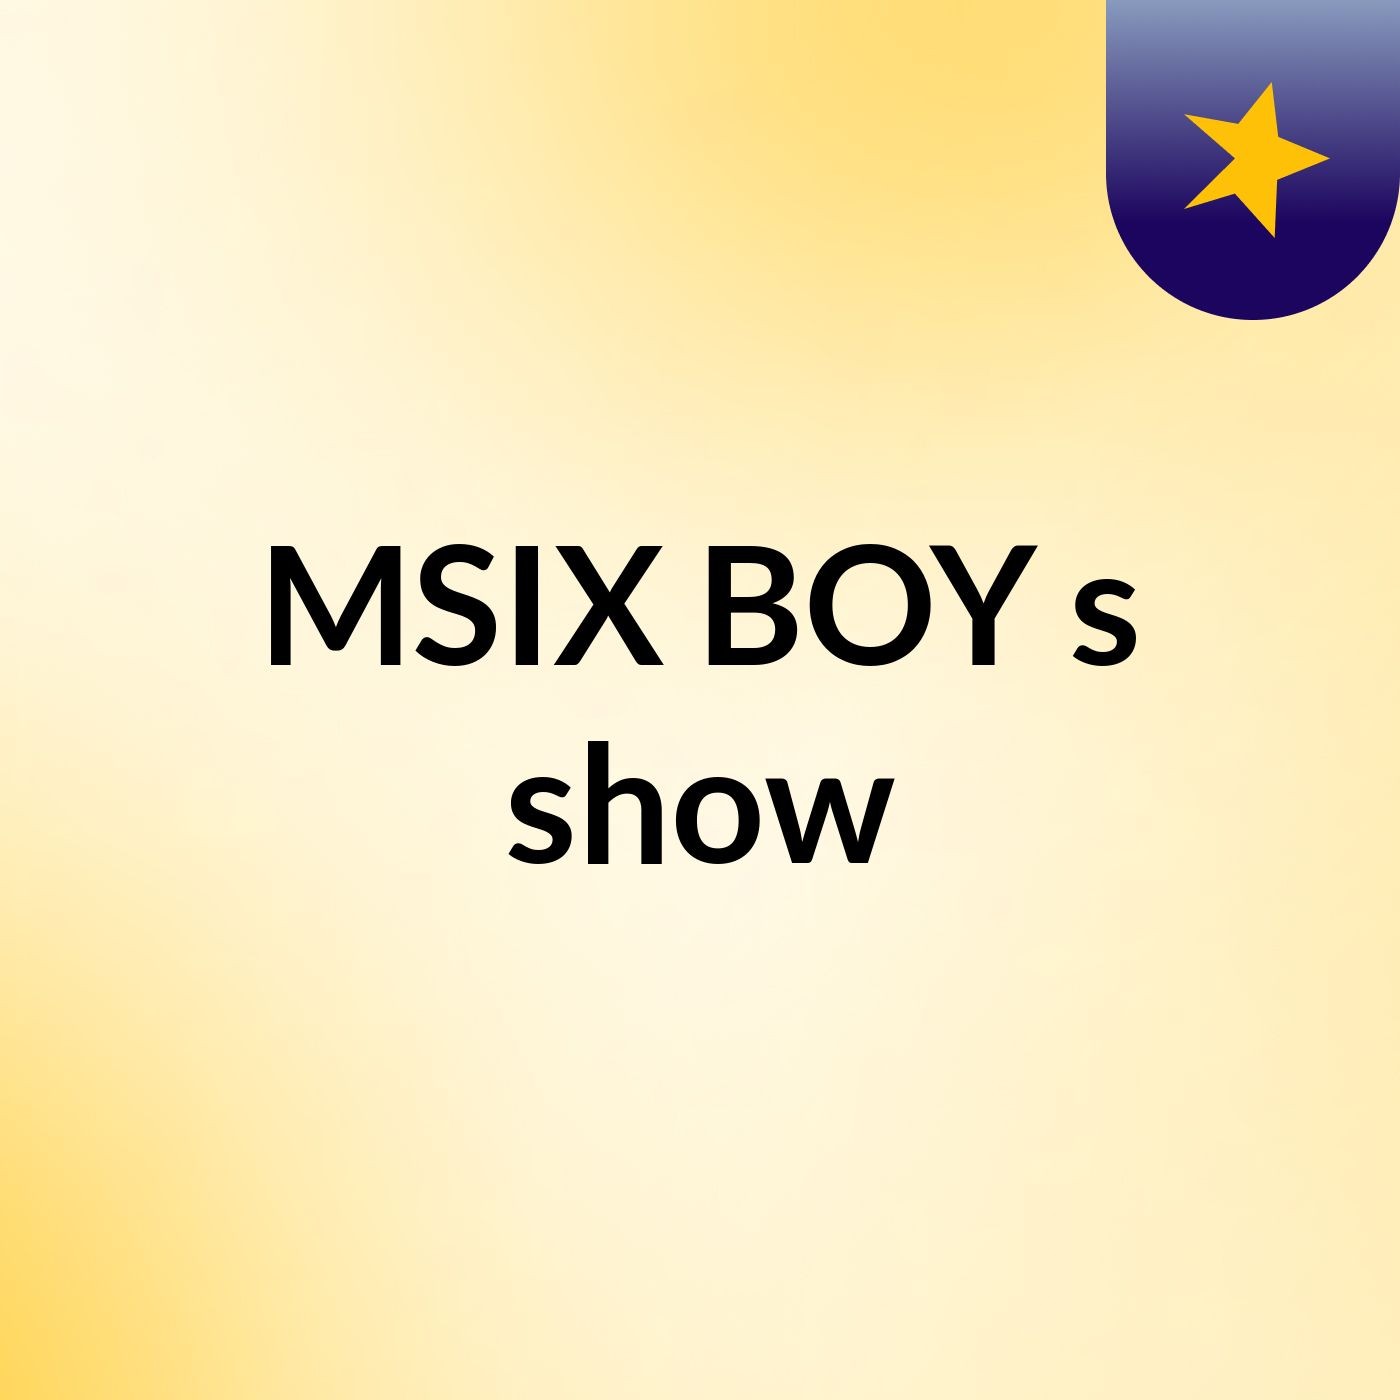 MSIX BOY's show